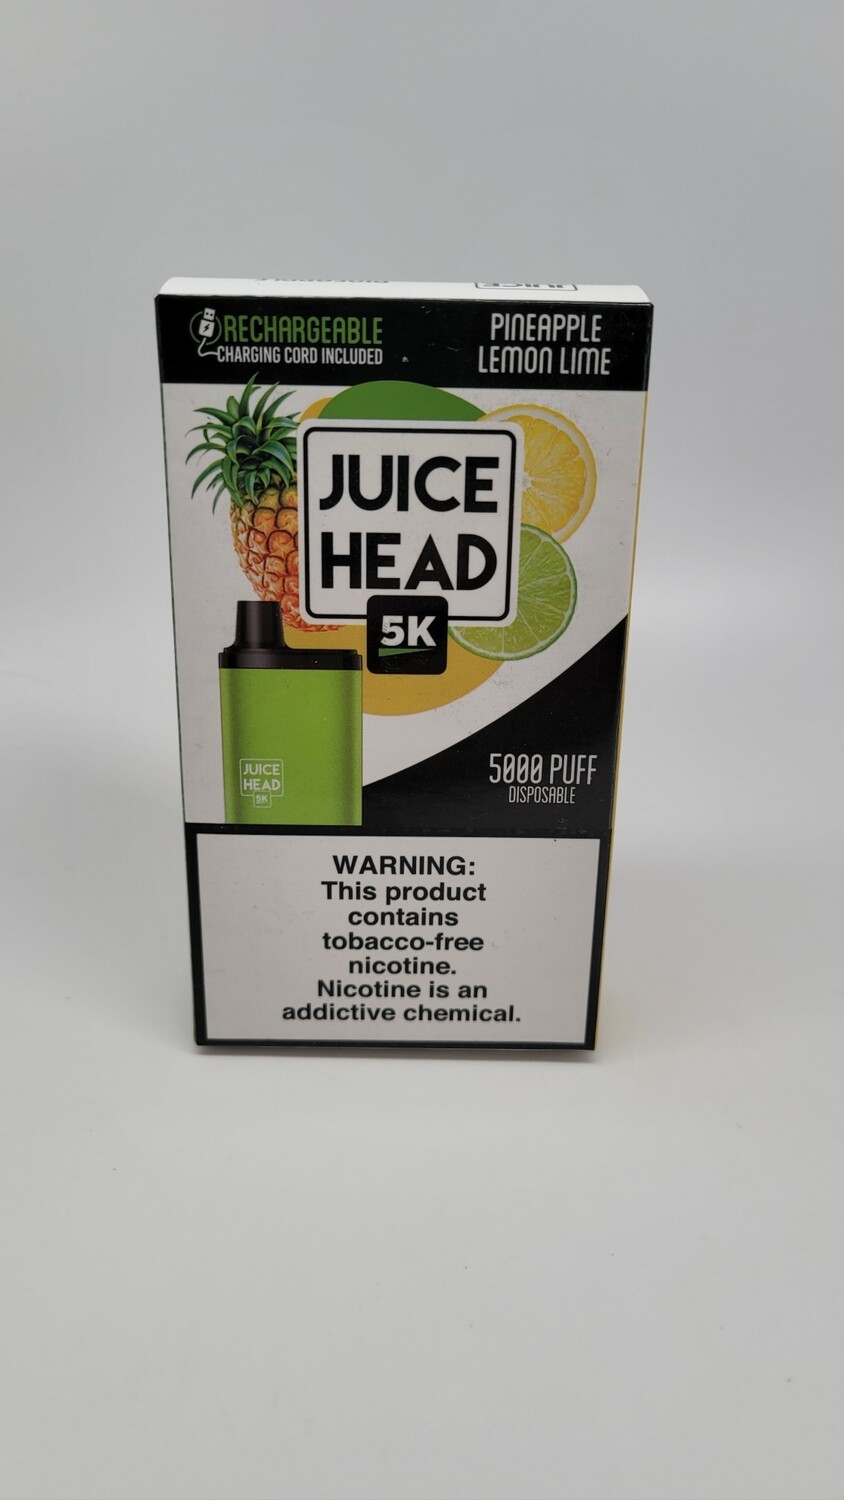 Juice Head 5K Disposable Pineapple Lemon Lime